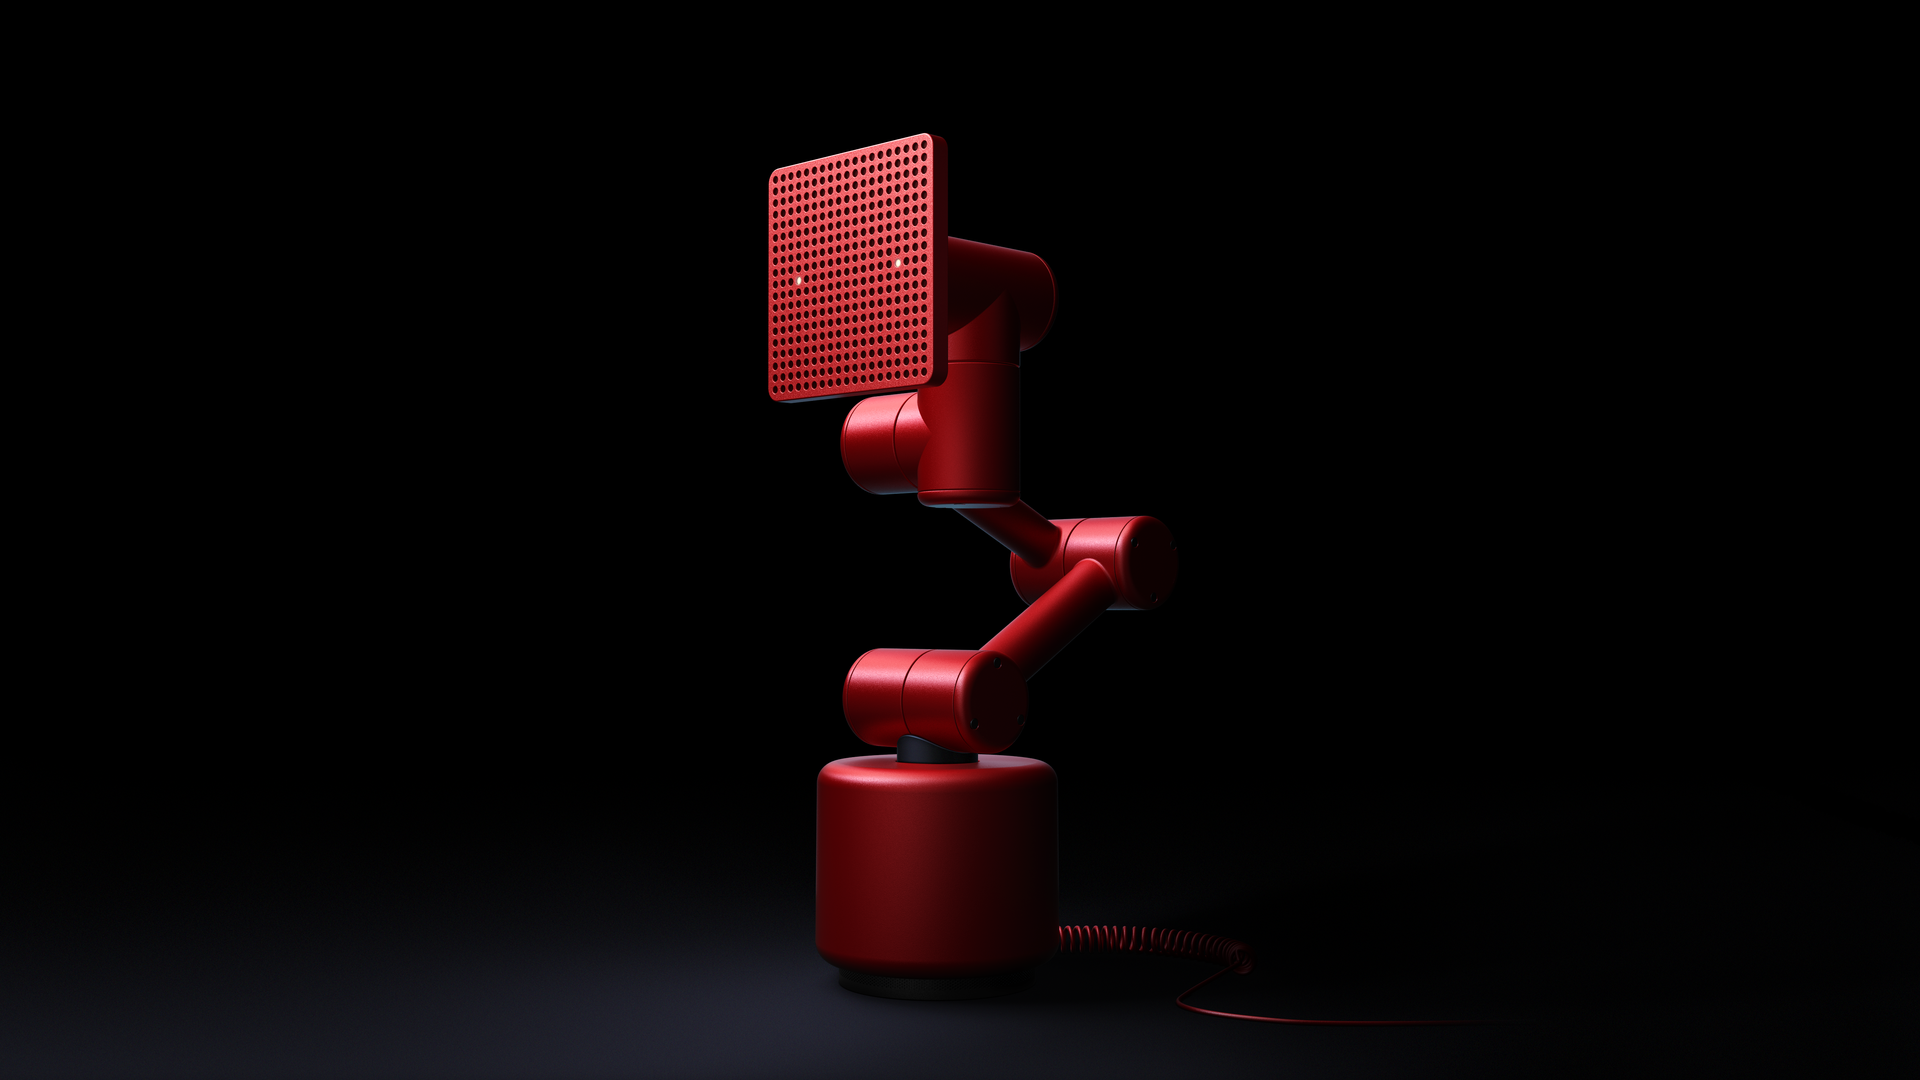 Baidu's upcoming Raven R smart speaker has a light-up digital face on an articulated arm.